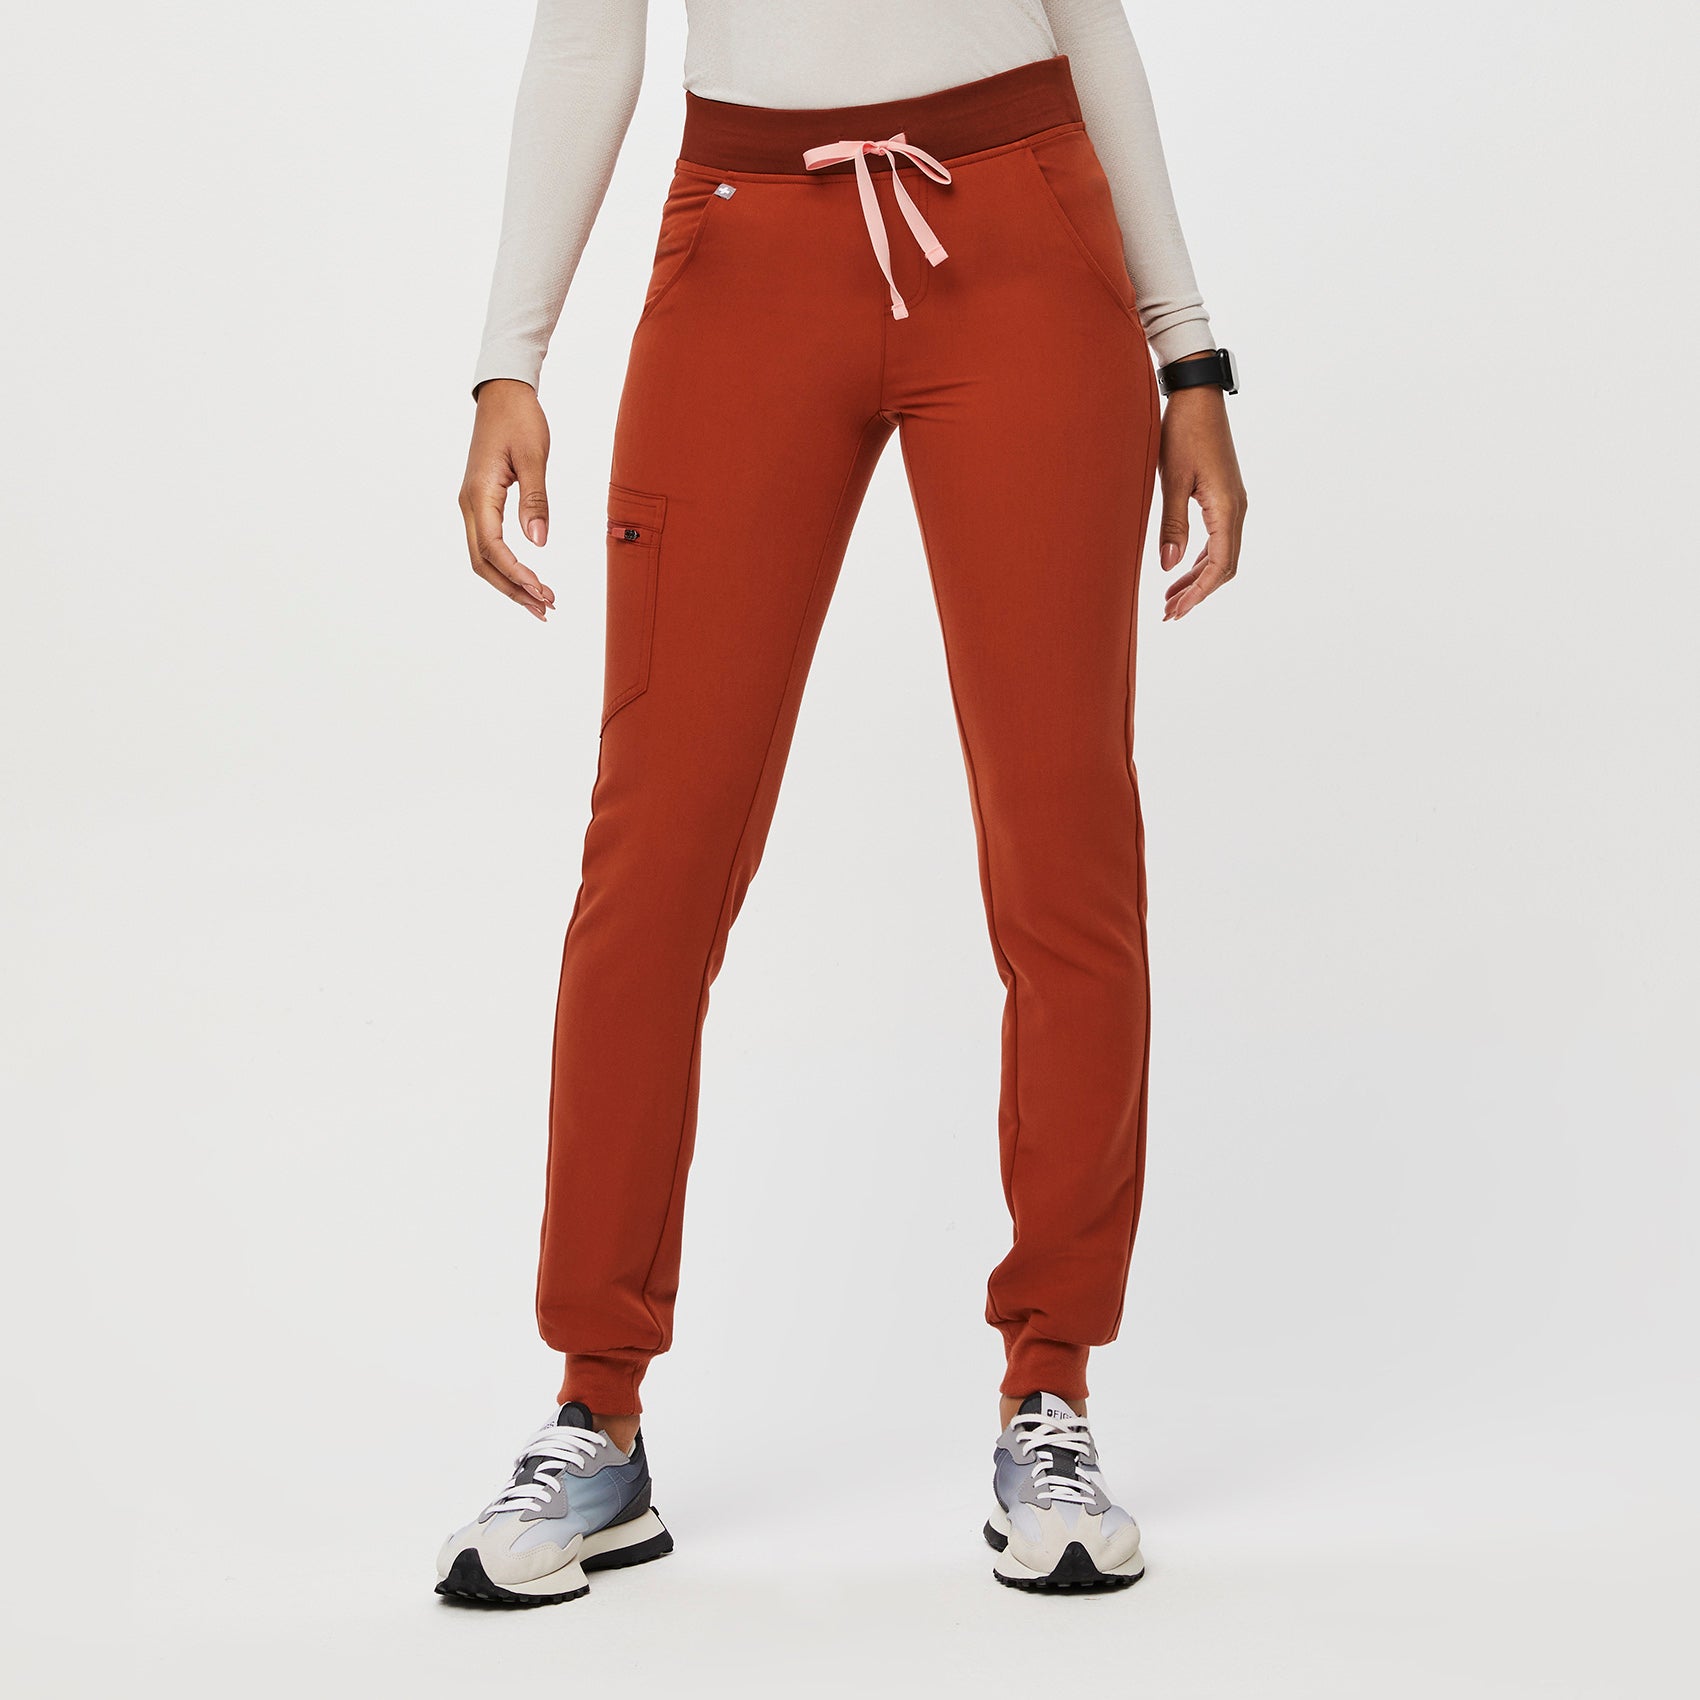 Women's Burgundy PINK Brand Drawstring Sweatpants Size S U1